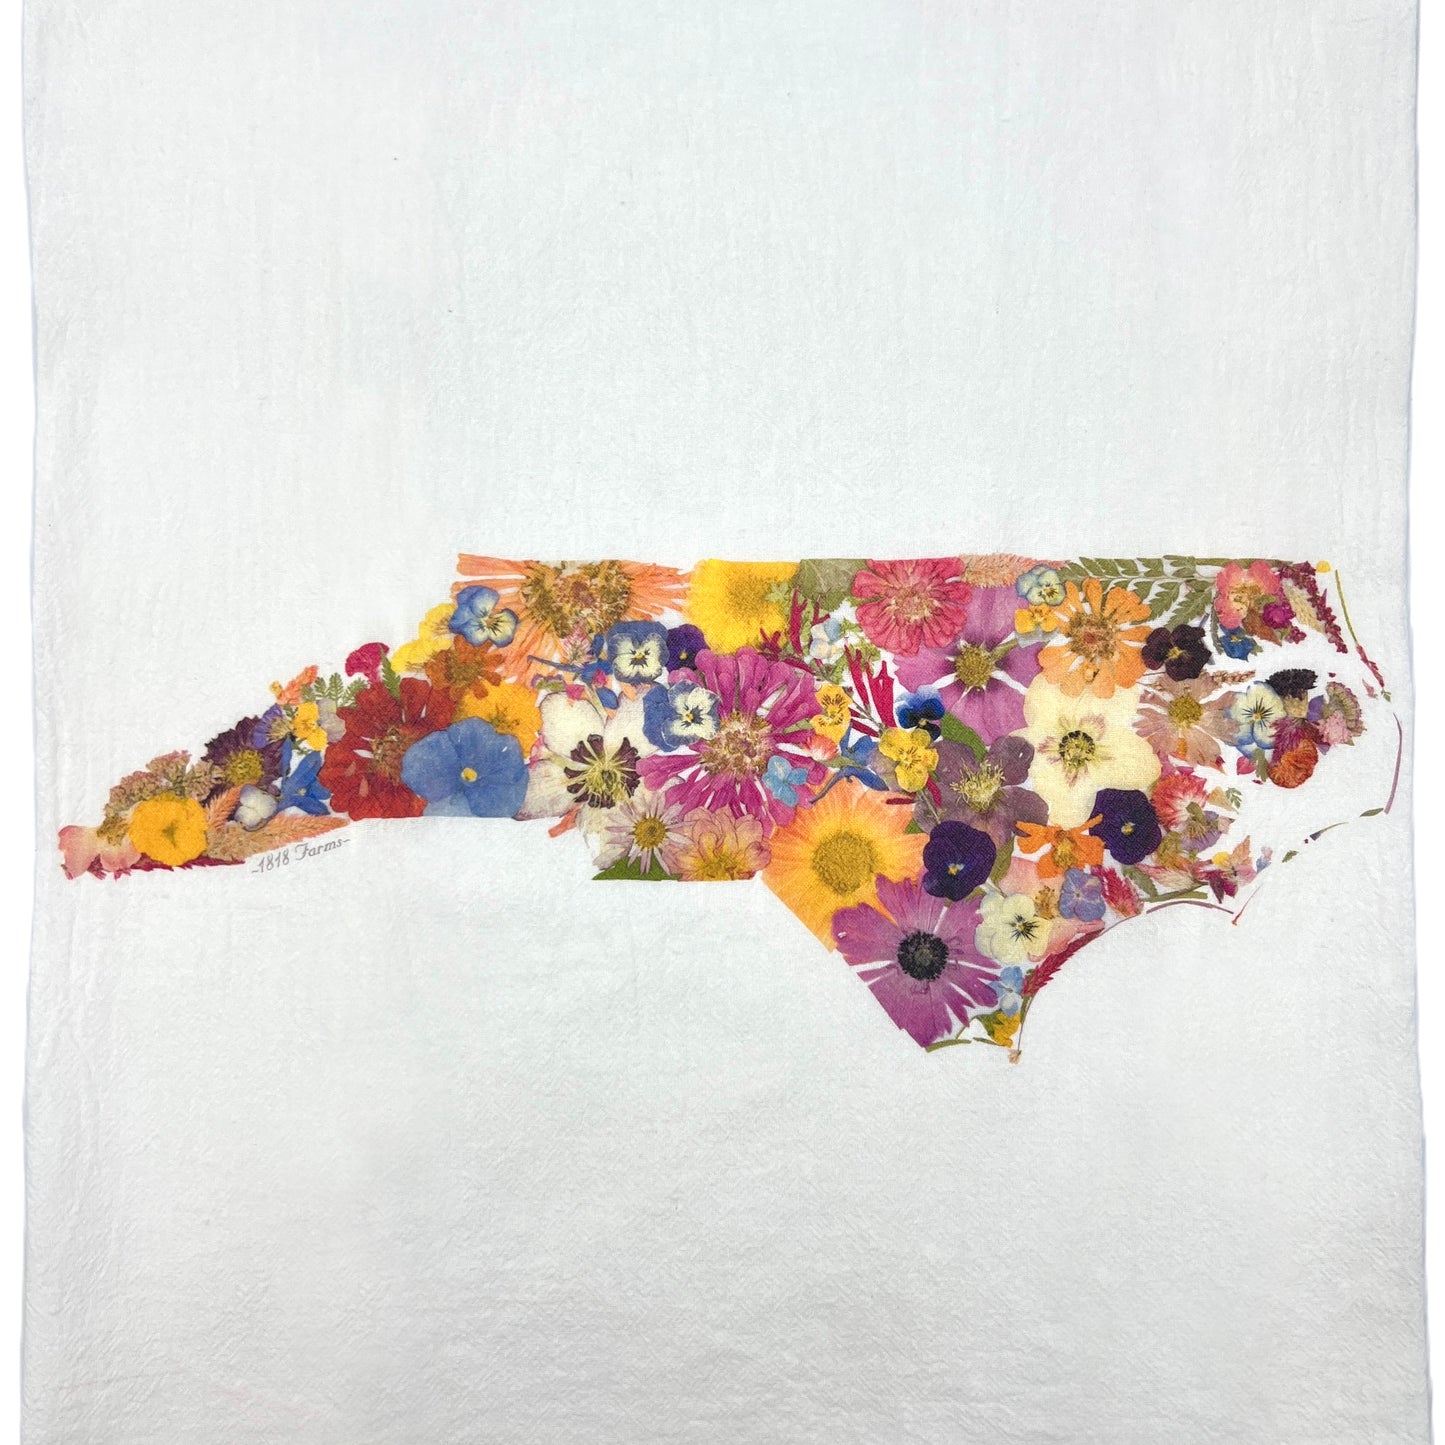 North Carolina Themed Flour Sack Towel  - "Where I Bloom" Collection Towel 1818 Farms   